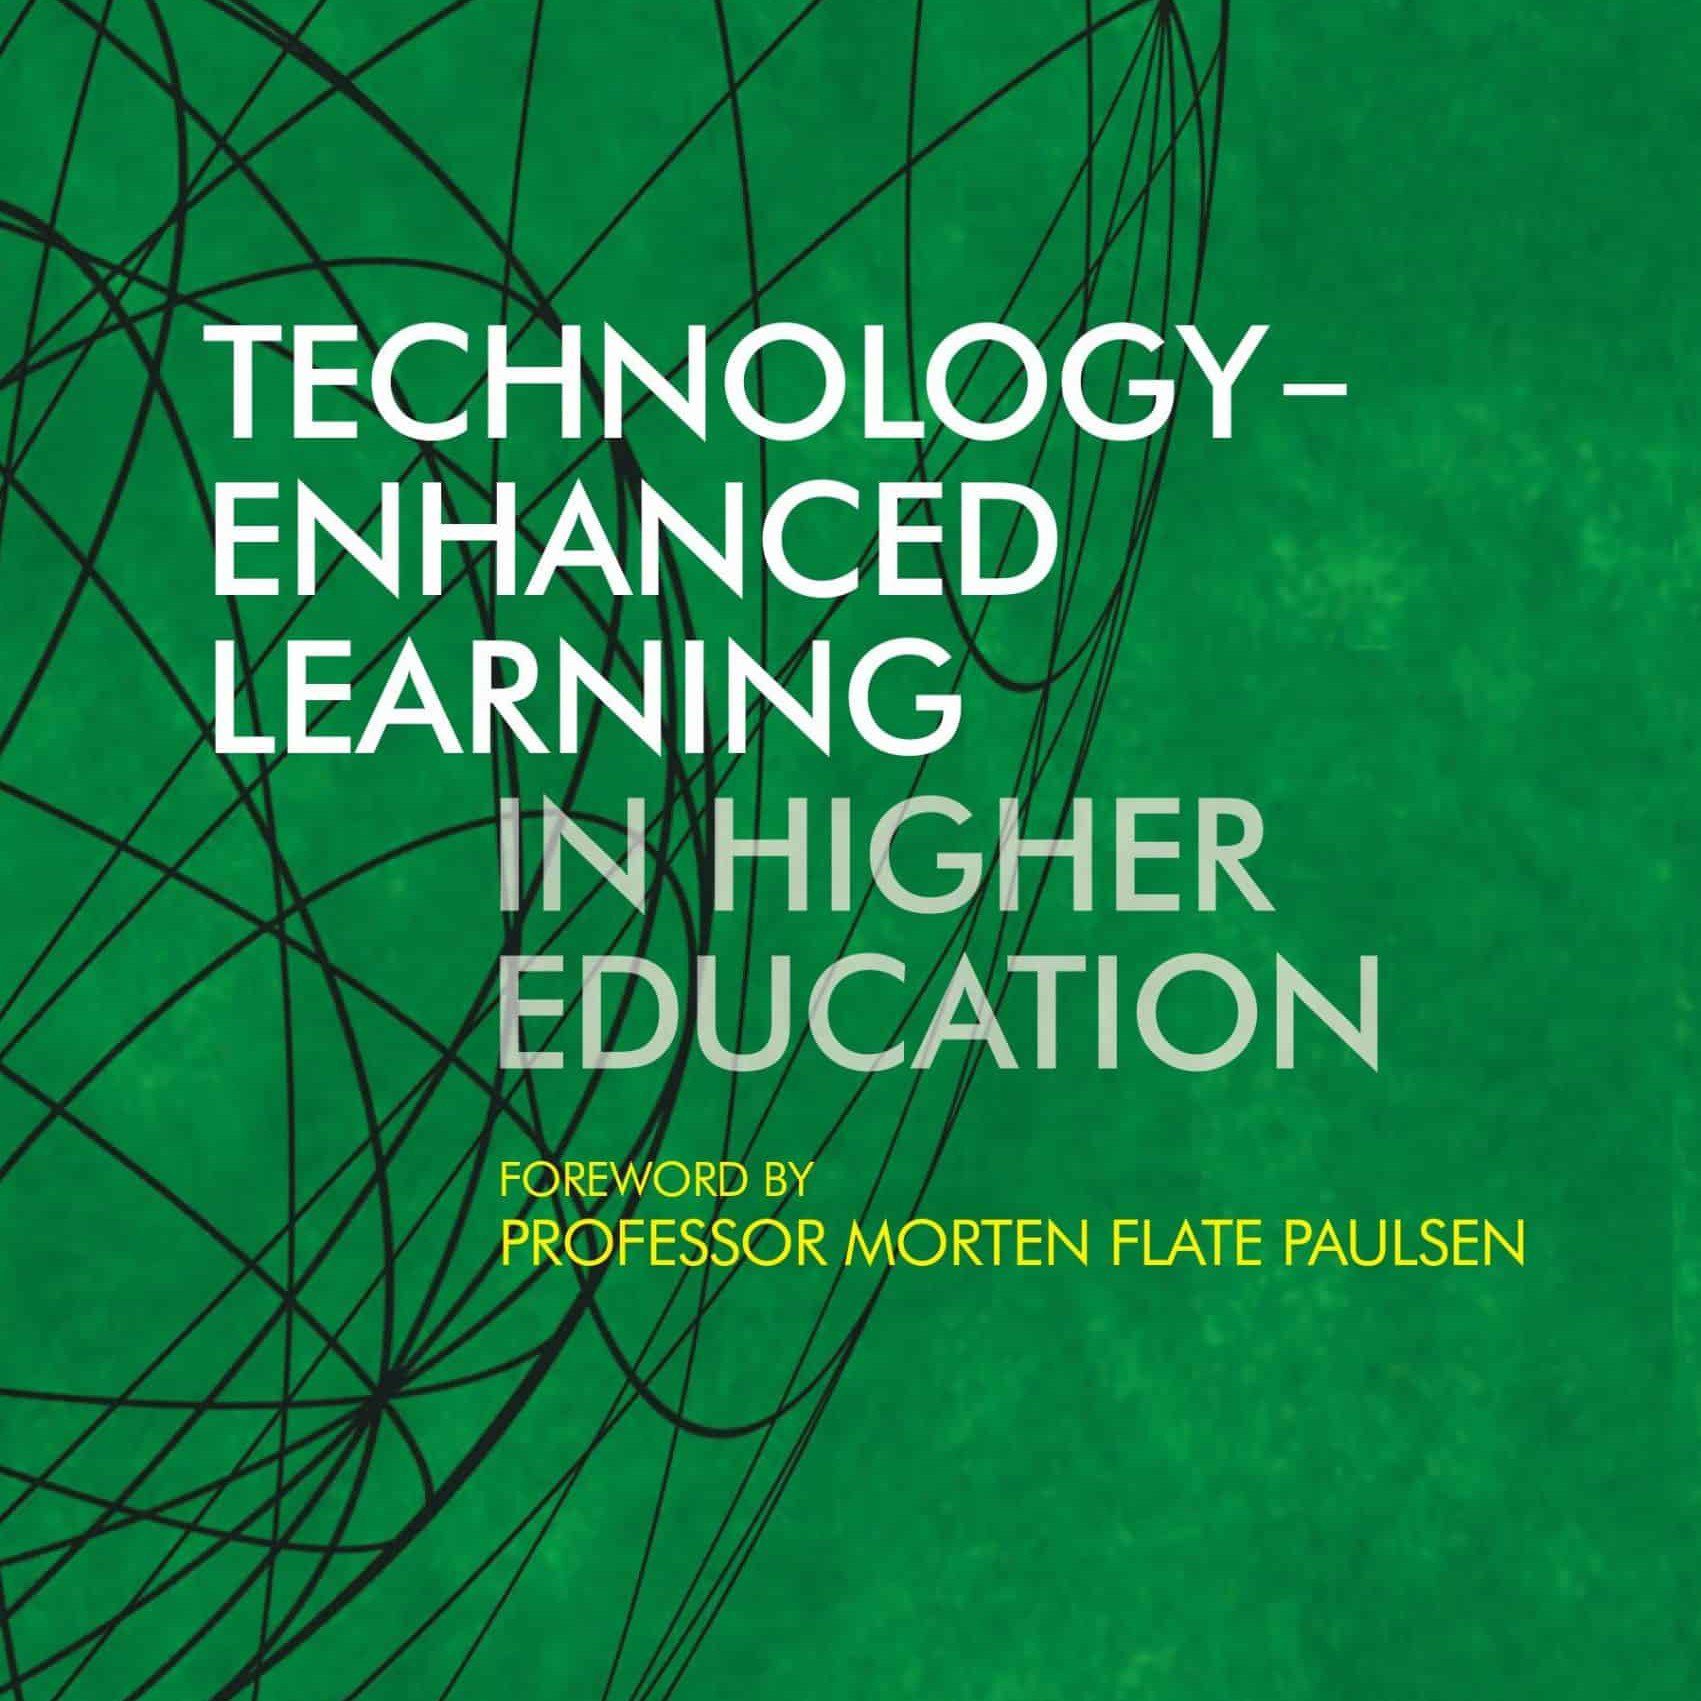 Technology-Enhanced Learning in Higher Education (2015) - John Branch - Paul Bartholomew - Claus Nygaard - Morten Flate Paulsen - Libri Publishing Ltd - Institute for Learning in Higher Education